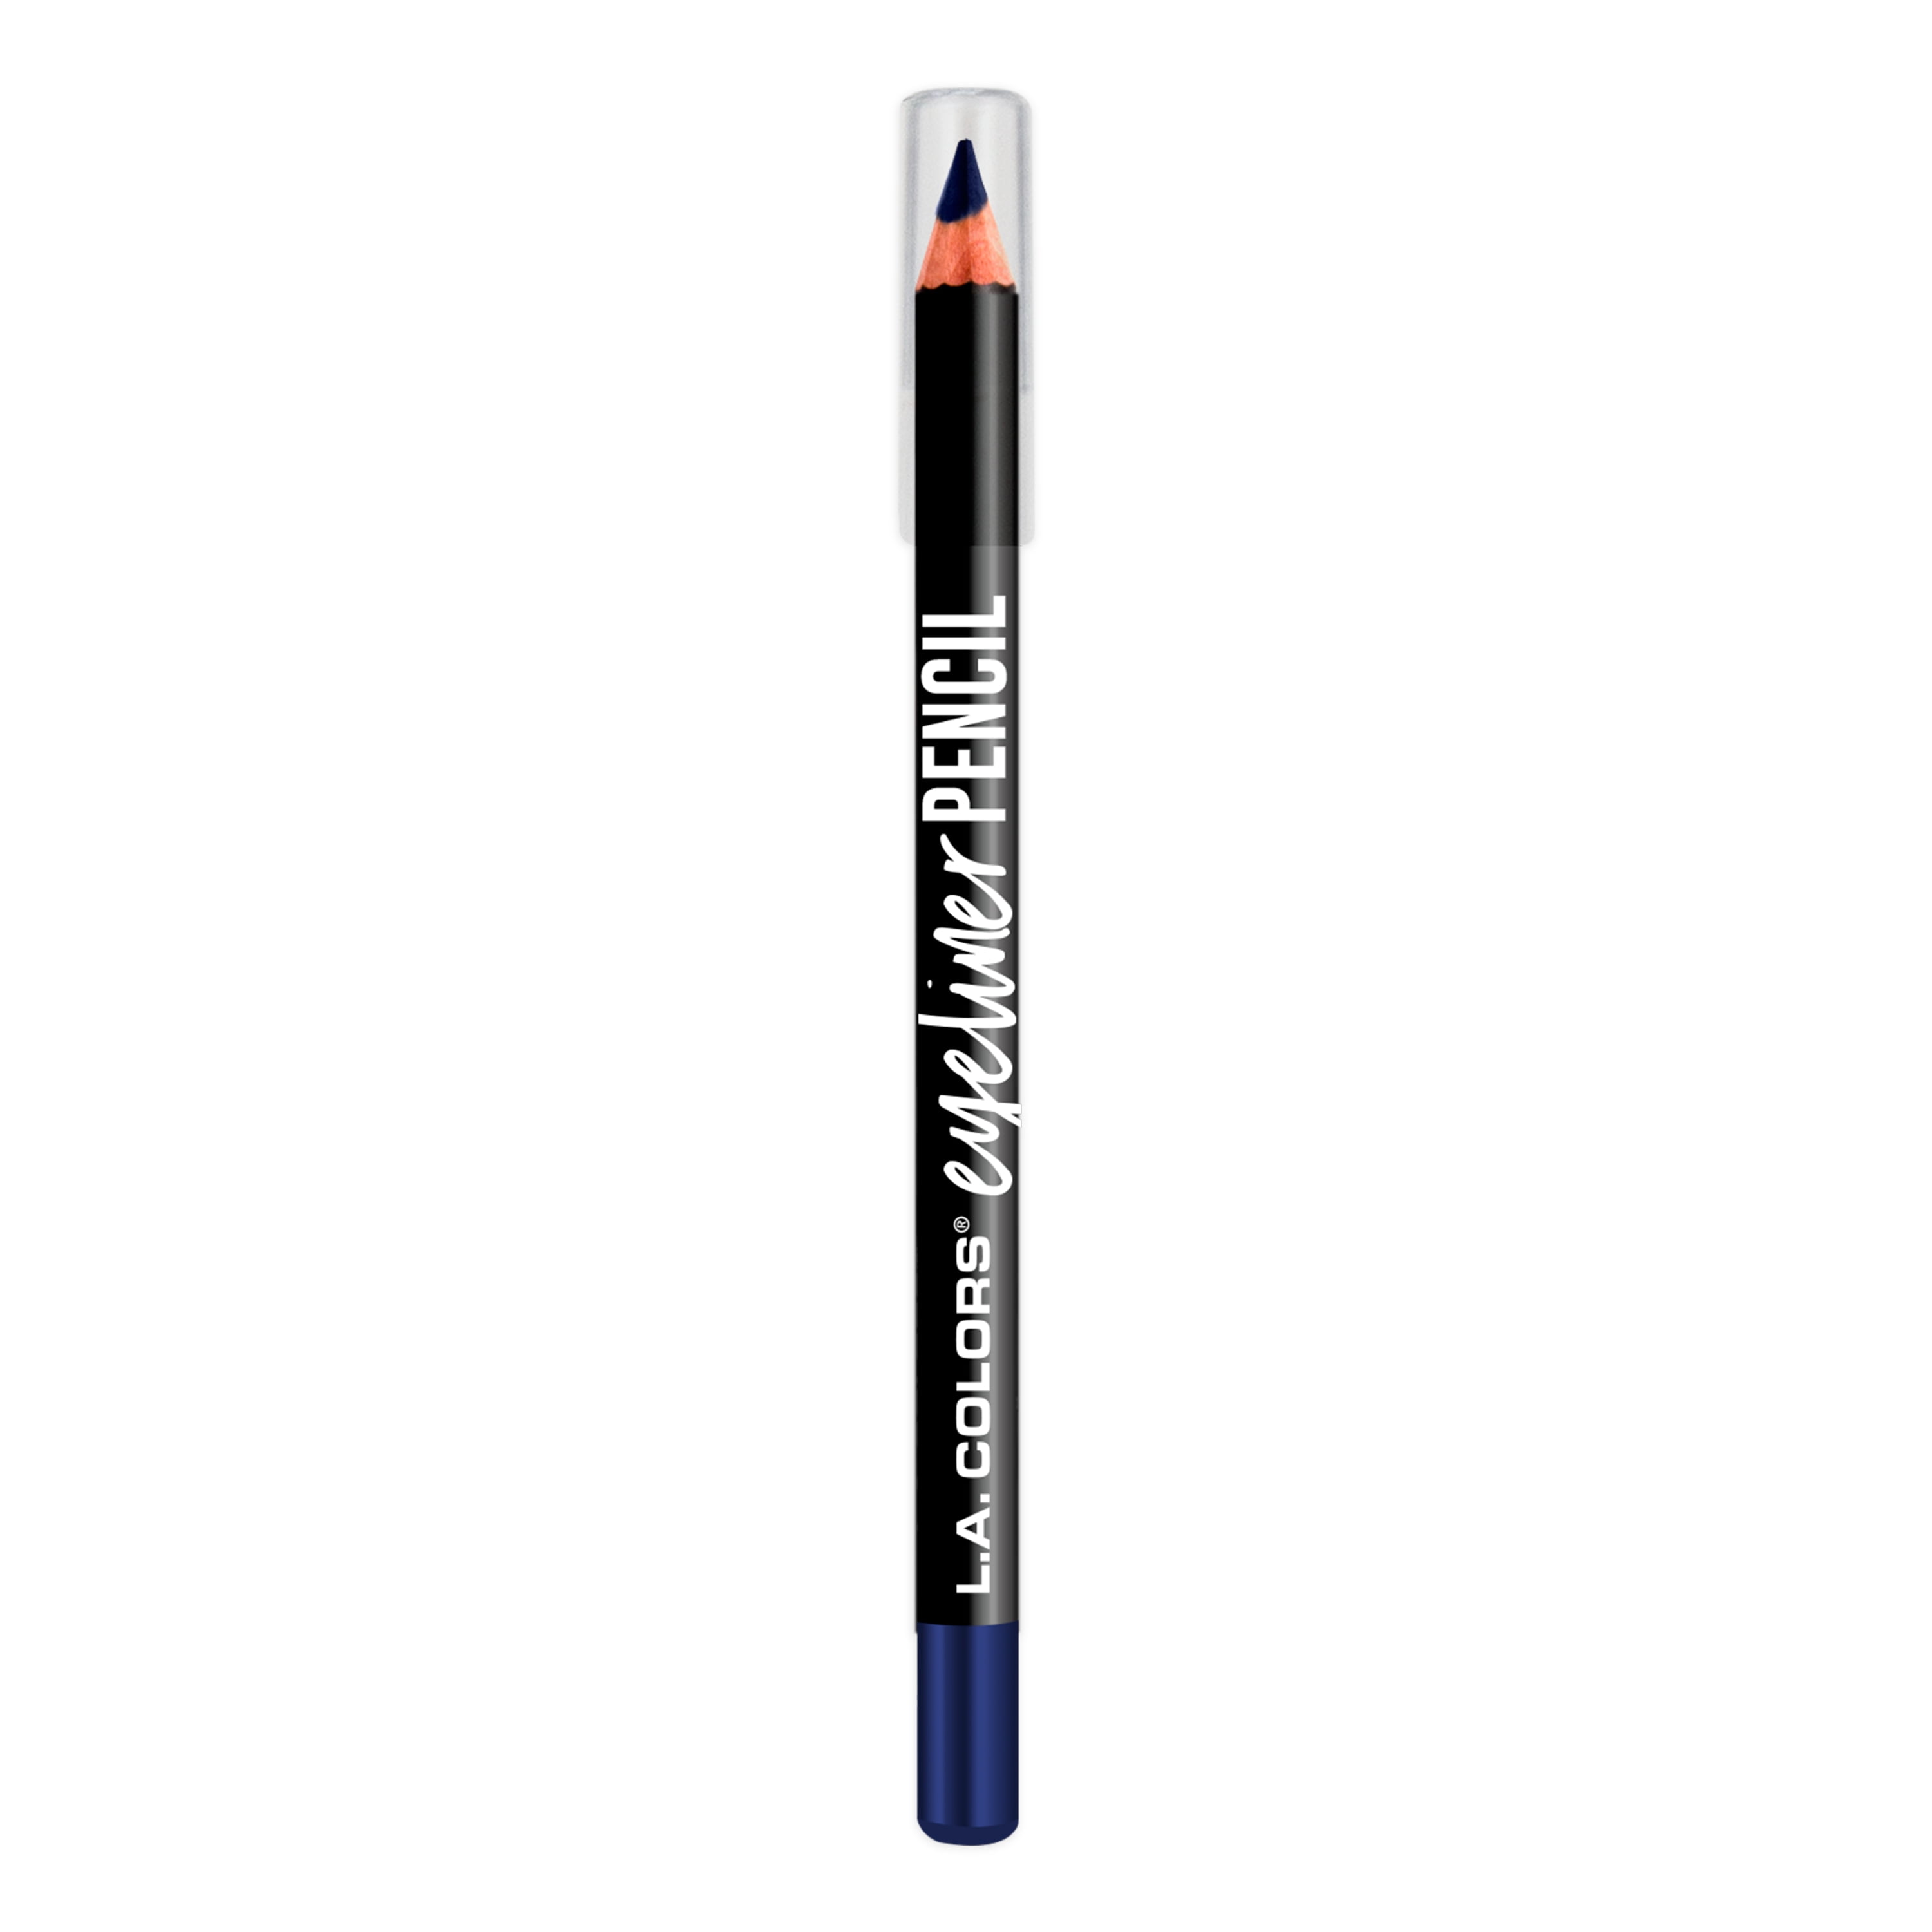 L.A. COLORS Eyeliner Pencil, Navy, fl oz 0.035